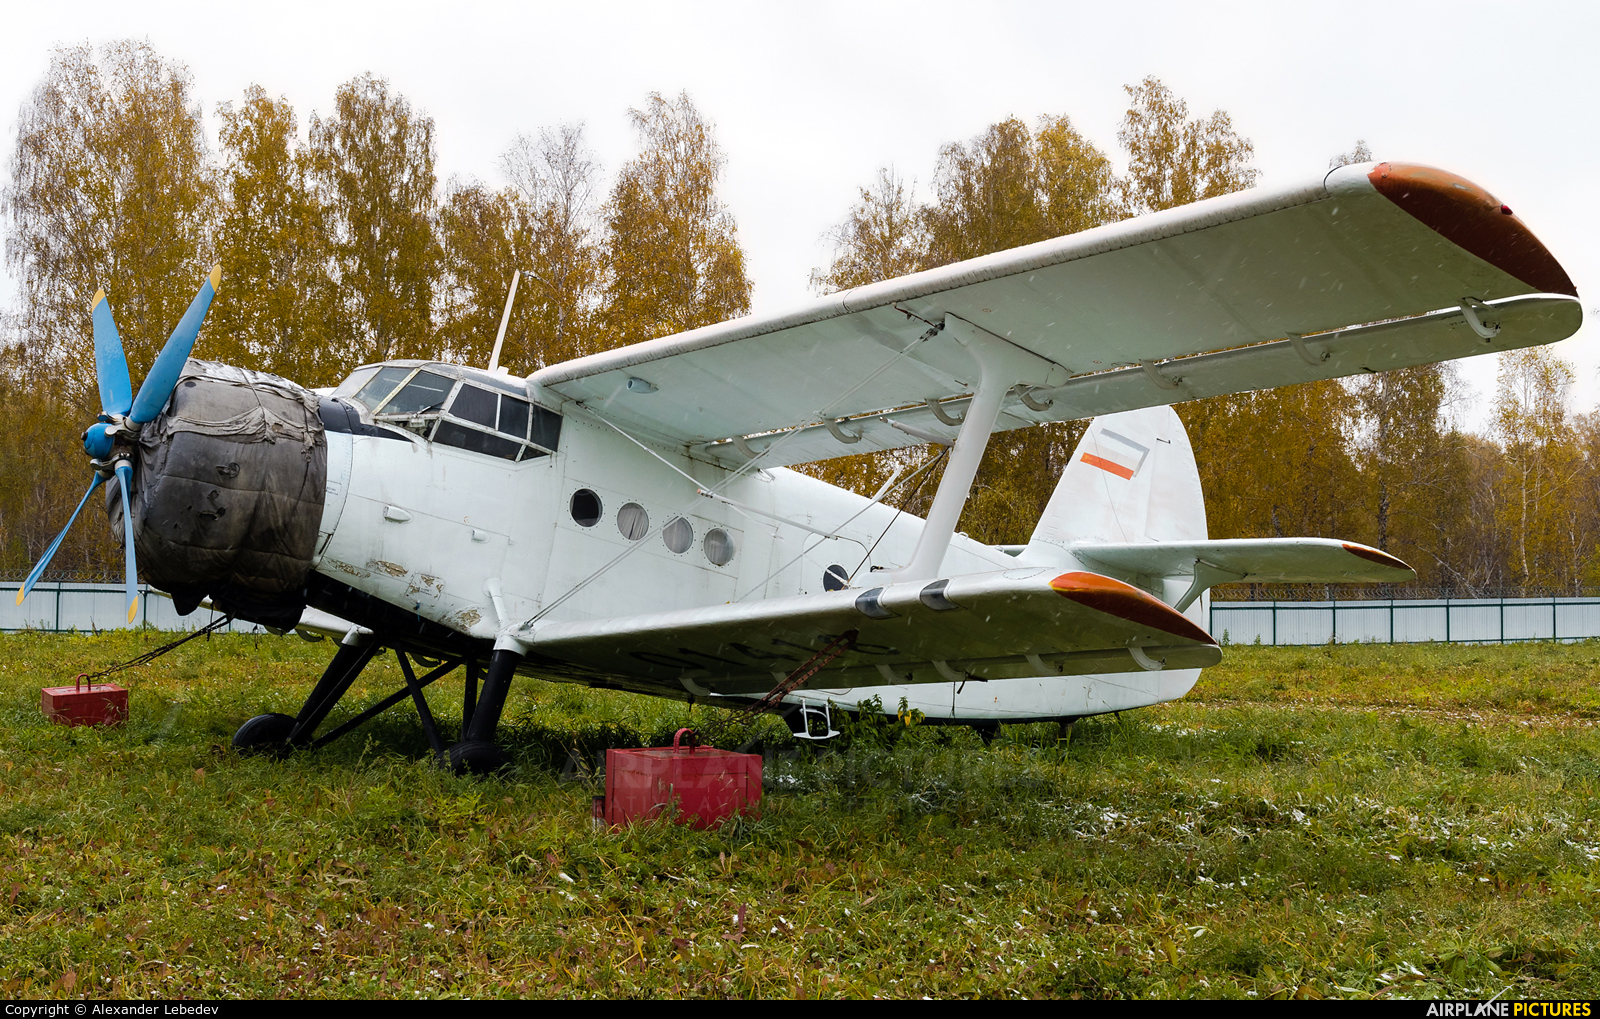 DOSAAF / ROSTO RA-01416 aircraft at Mochishche